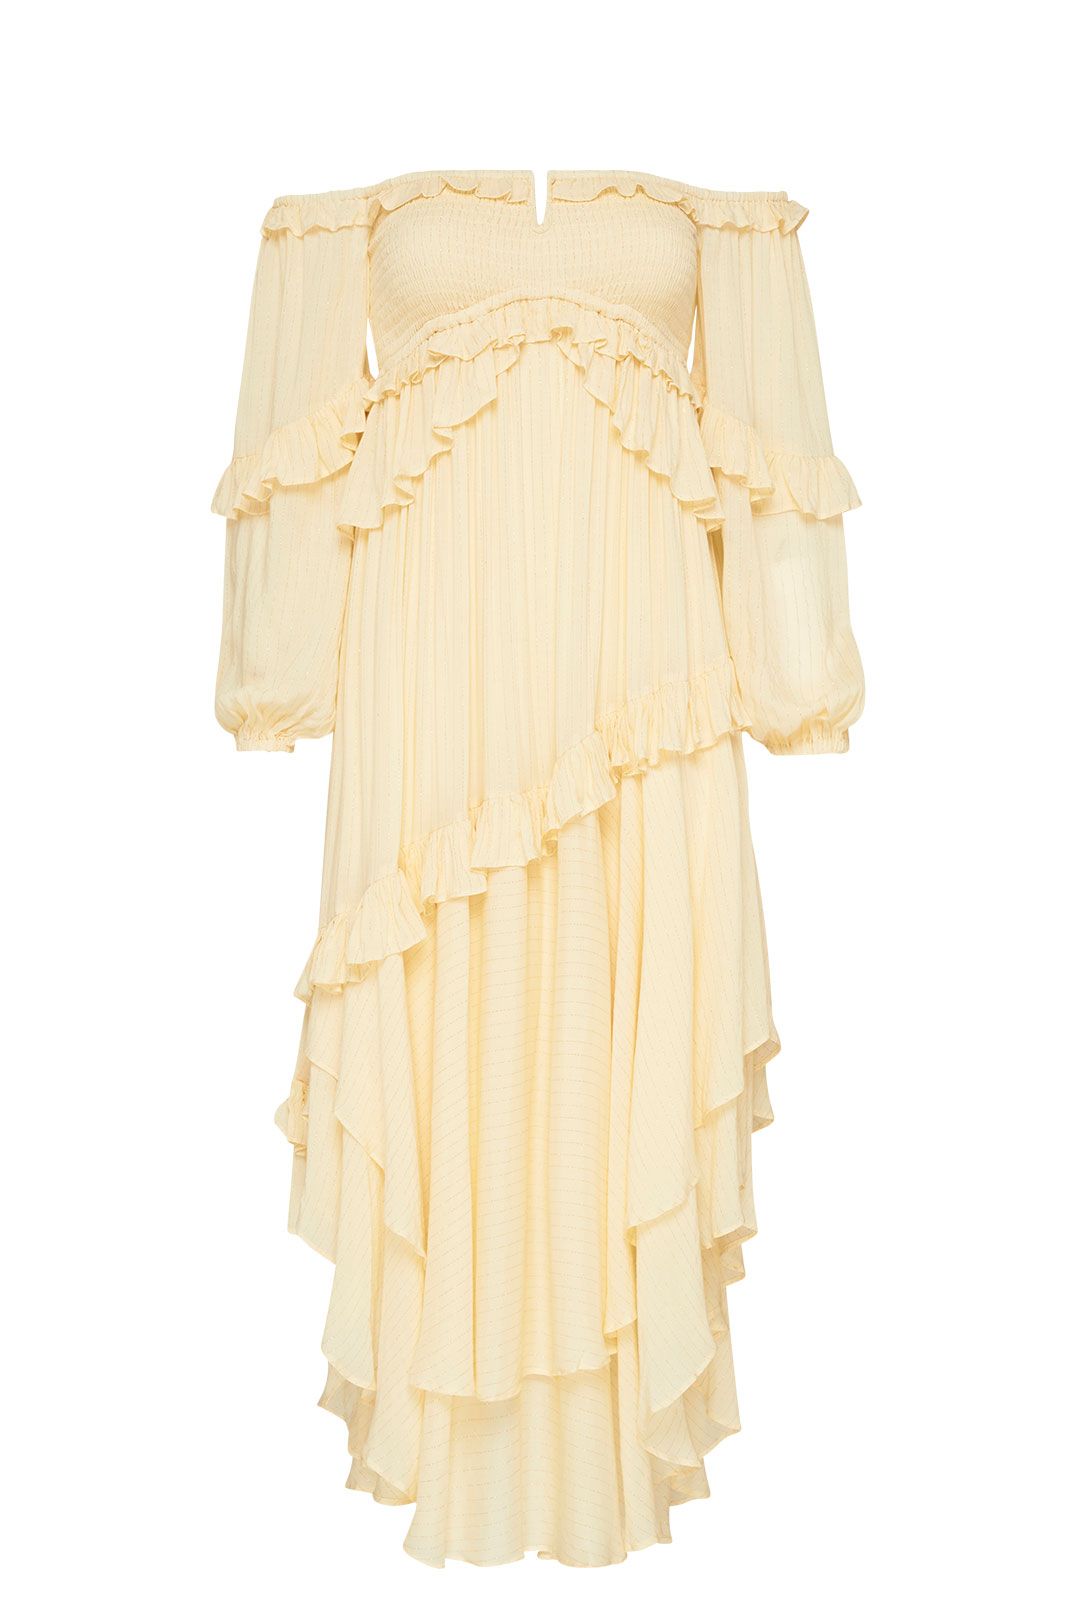 Clementine Mermaid Dress in Cream | Spell | GlamCorner